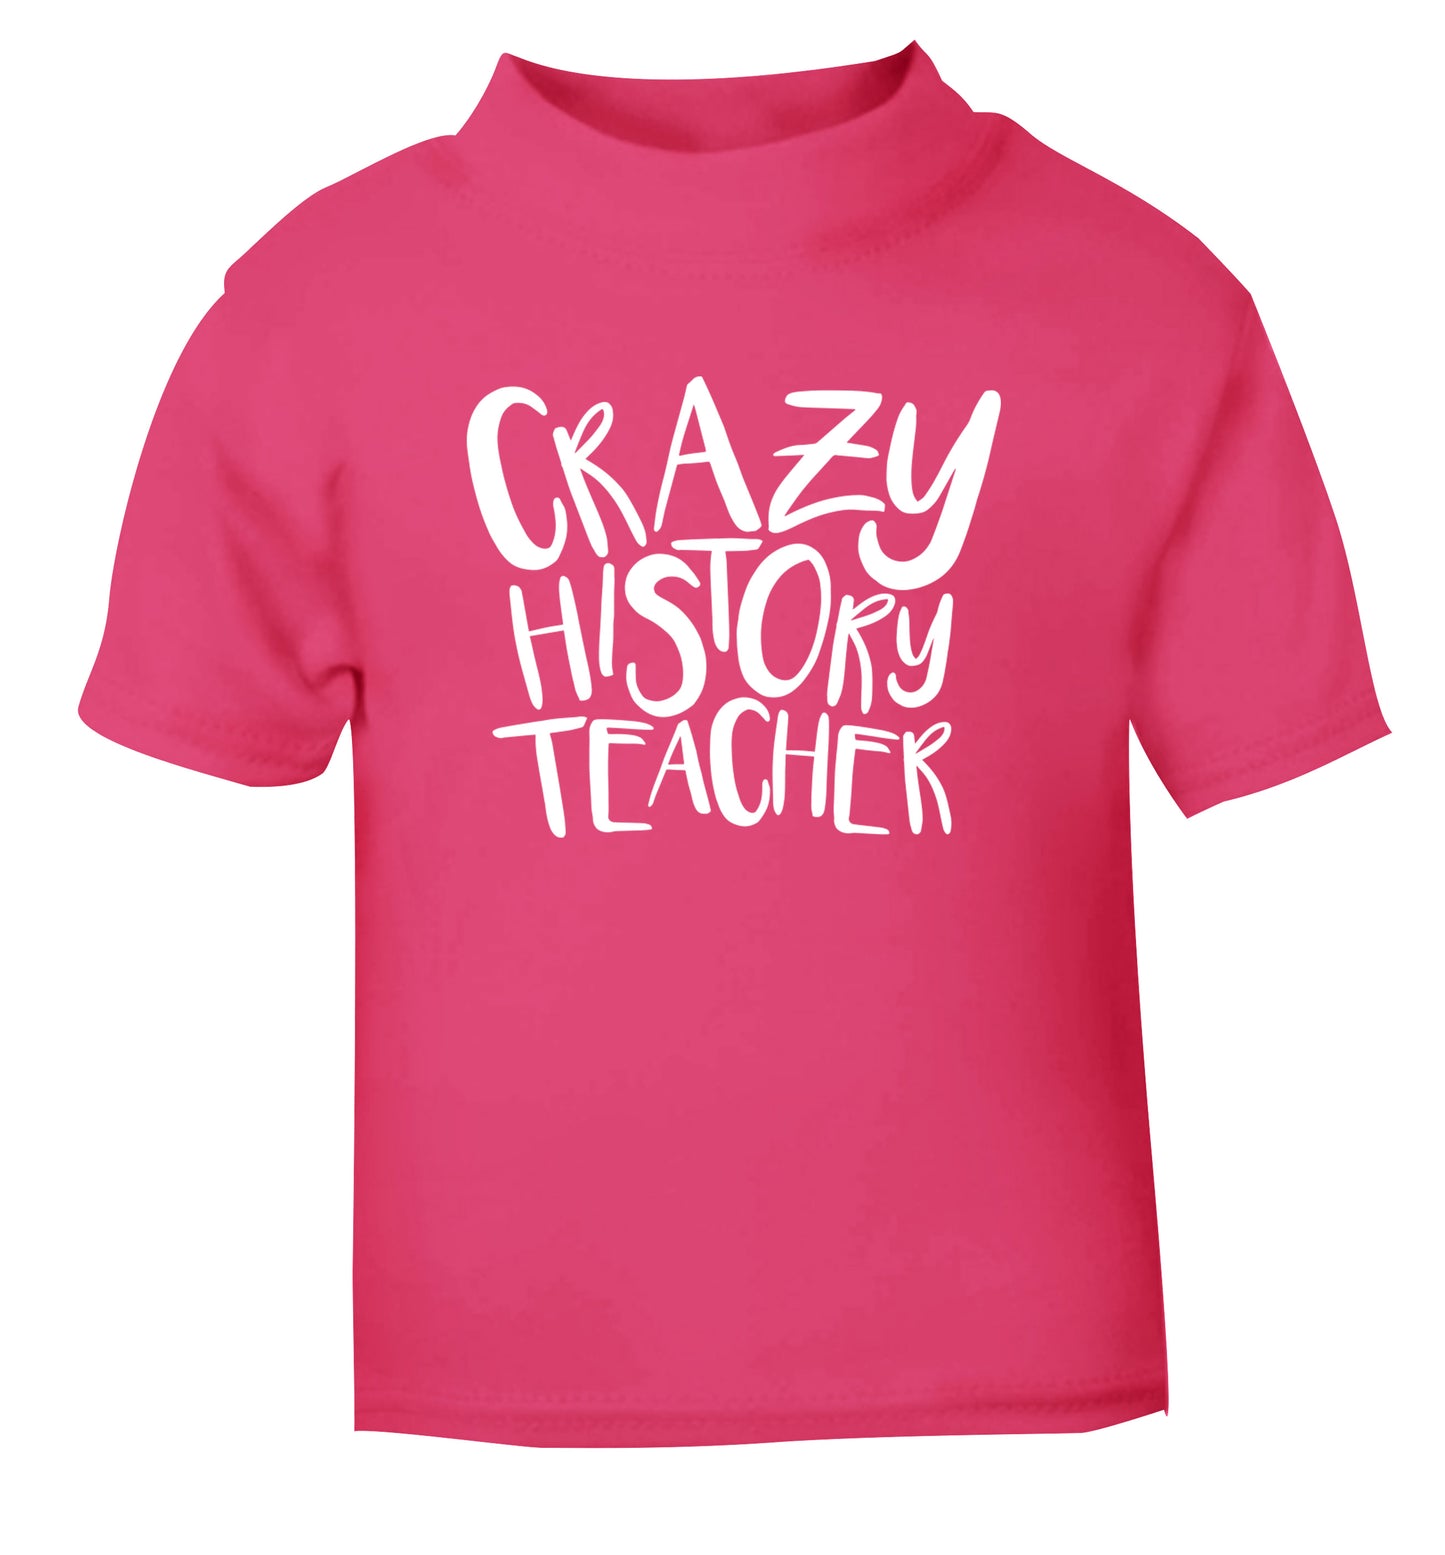 Crazy history teacher pink Baby Toddler Tshirt 2 Years